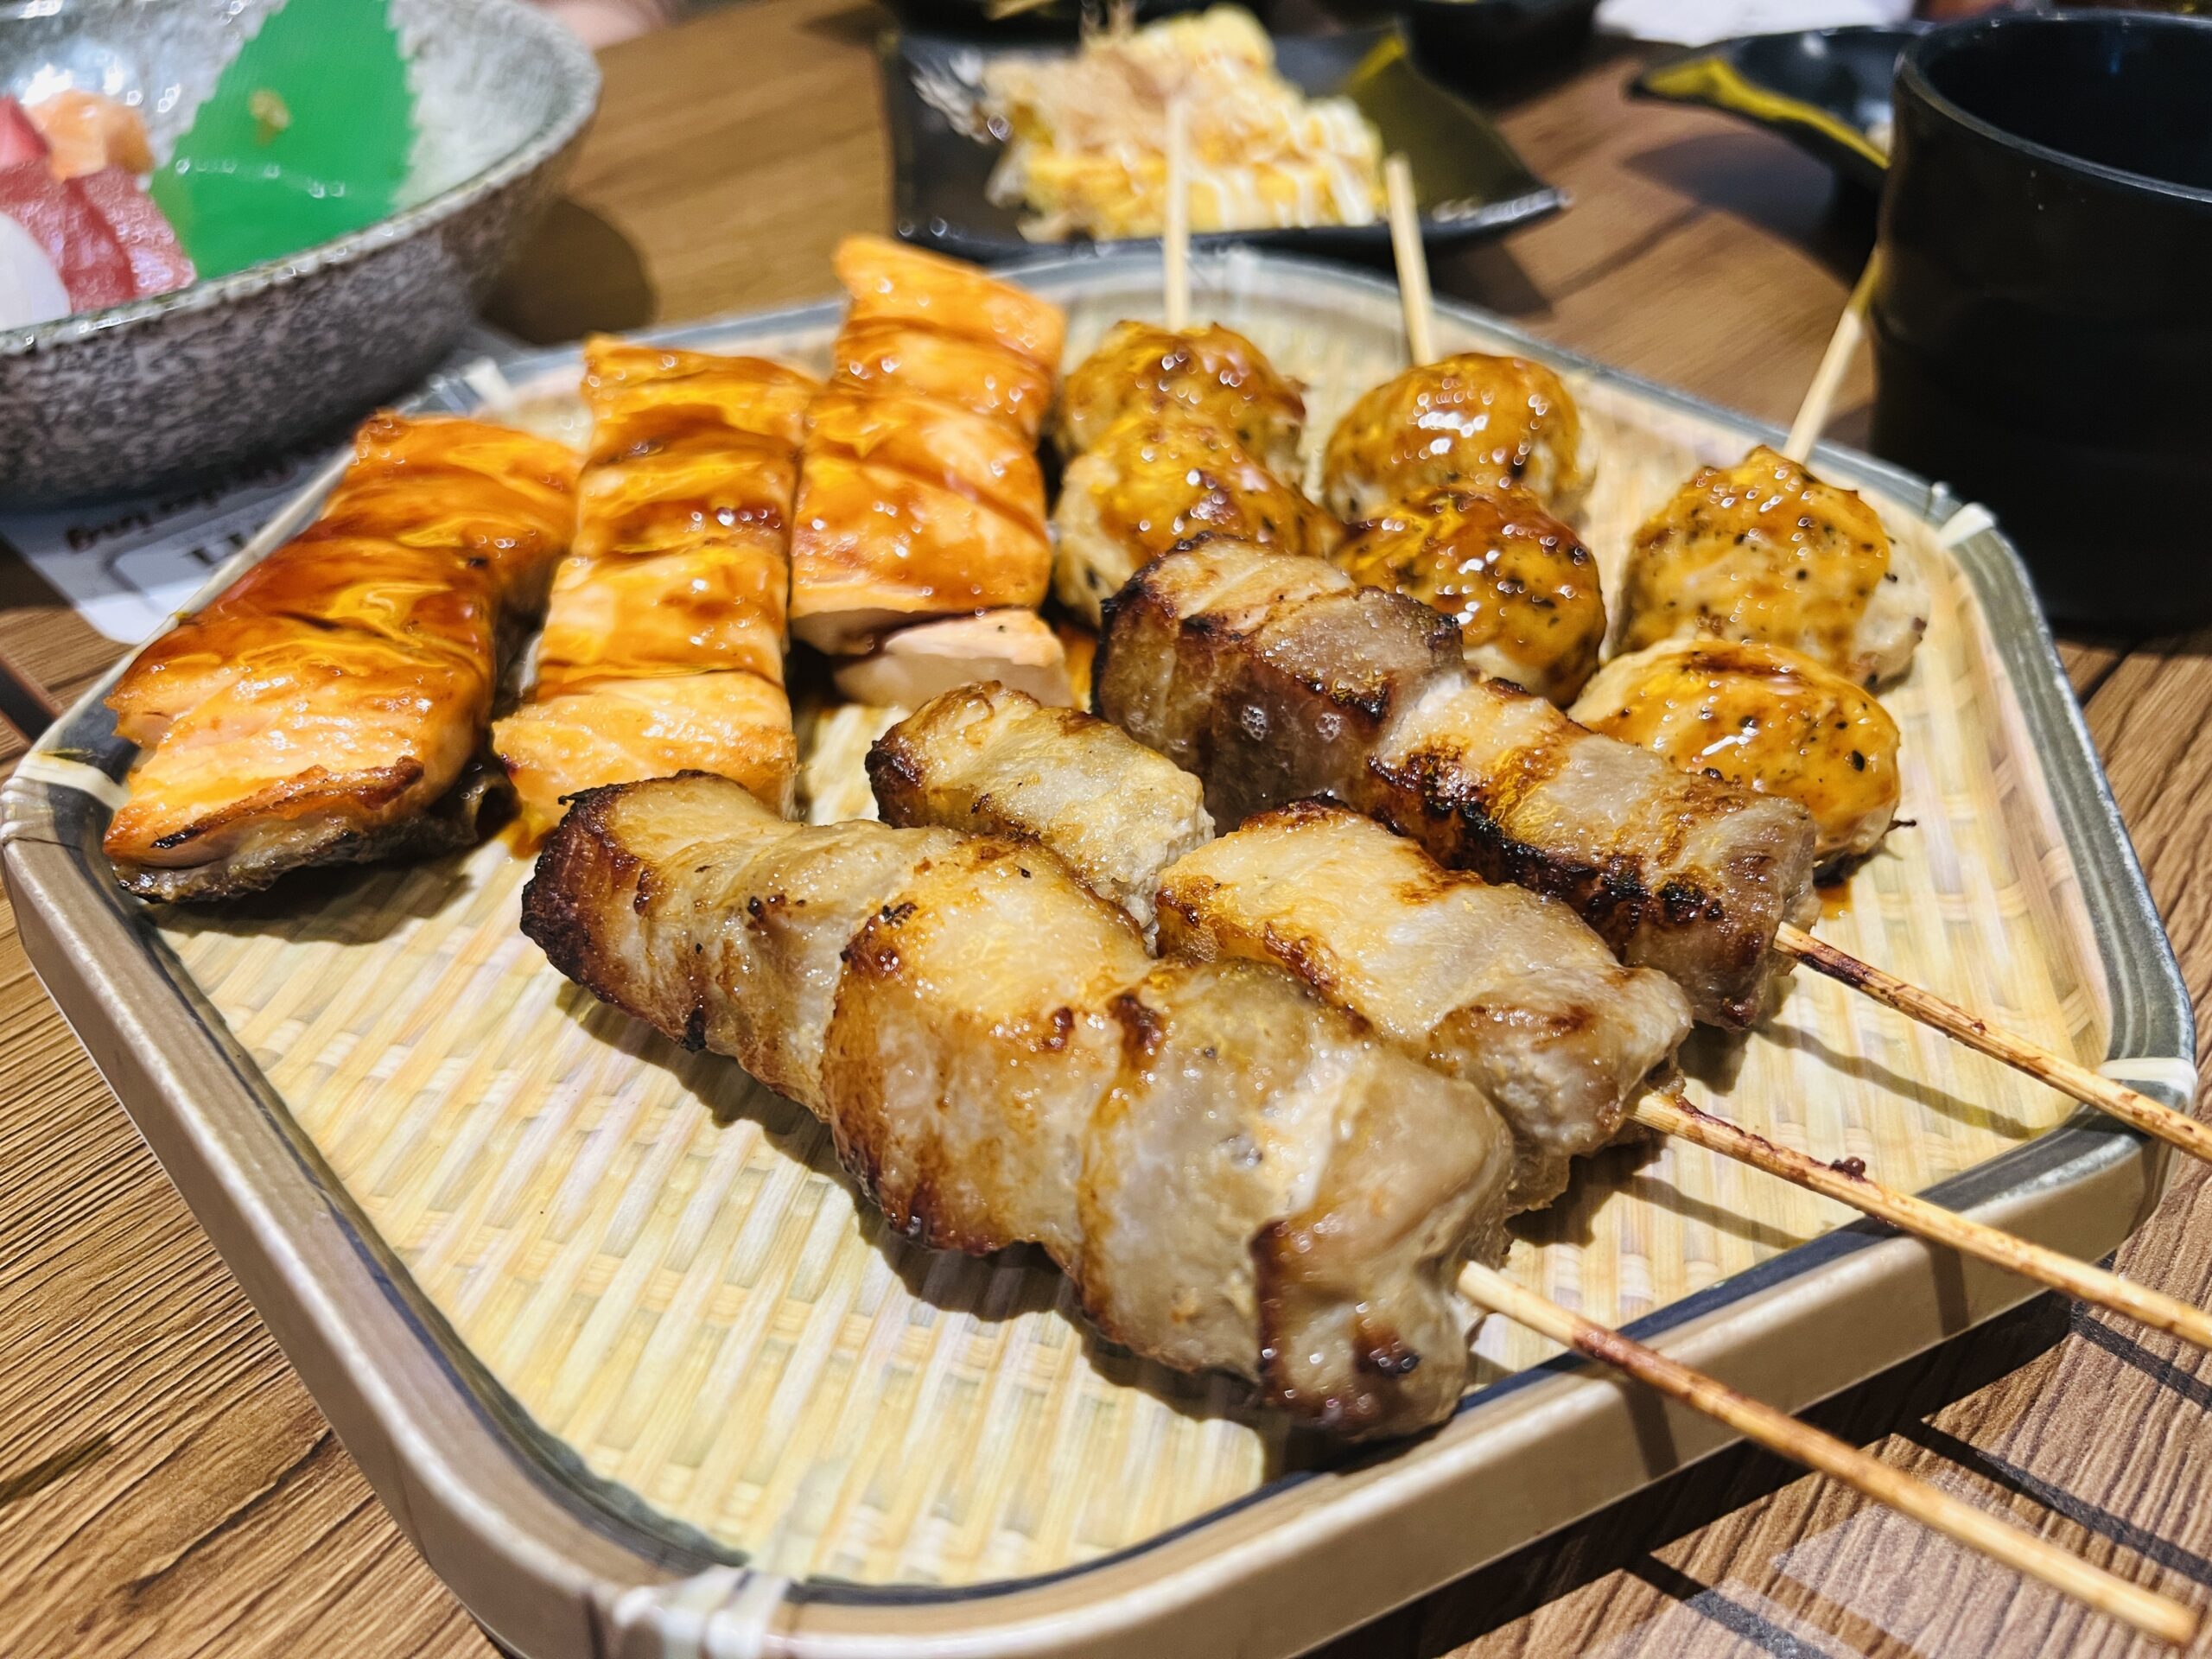 Shin Minori Japanese Restaurant - Grilled Meats